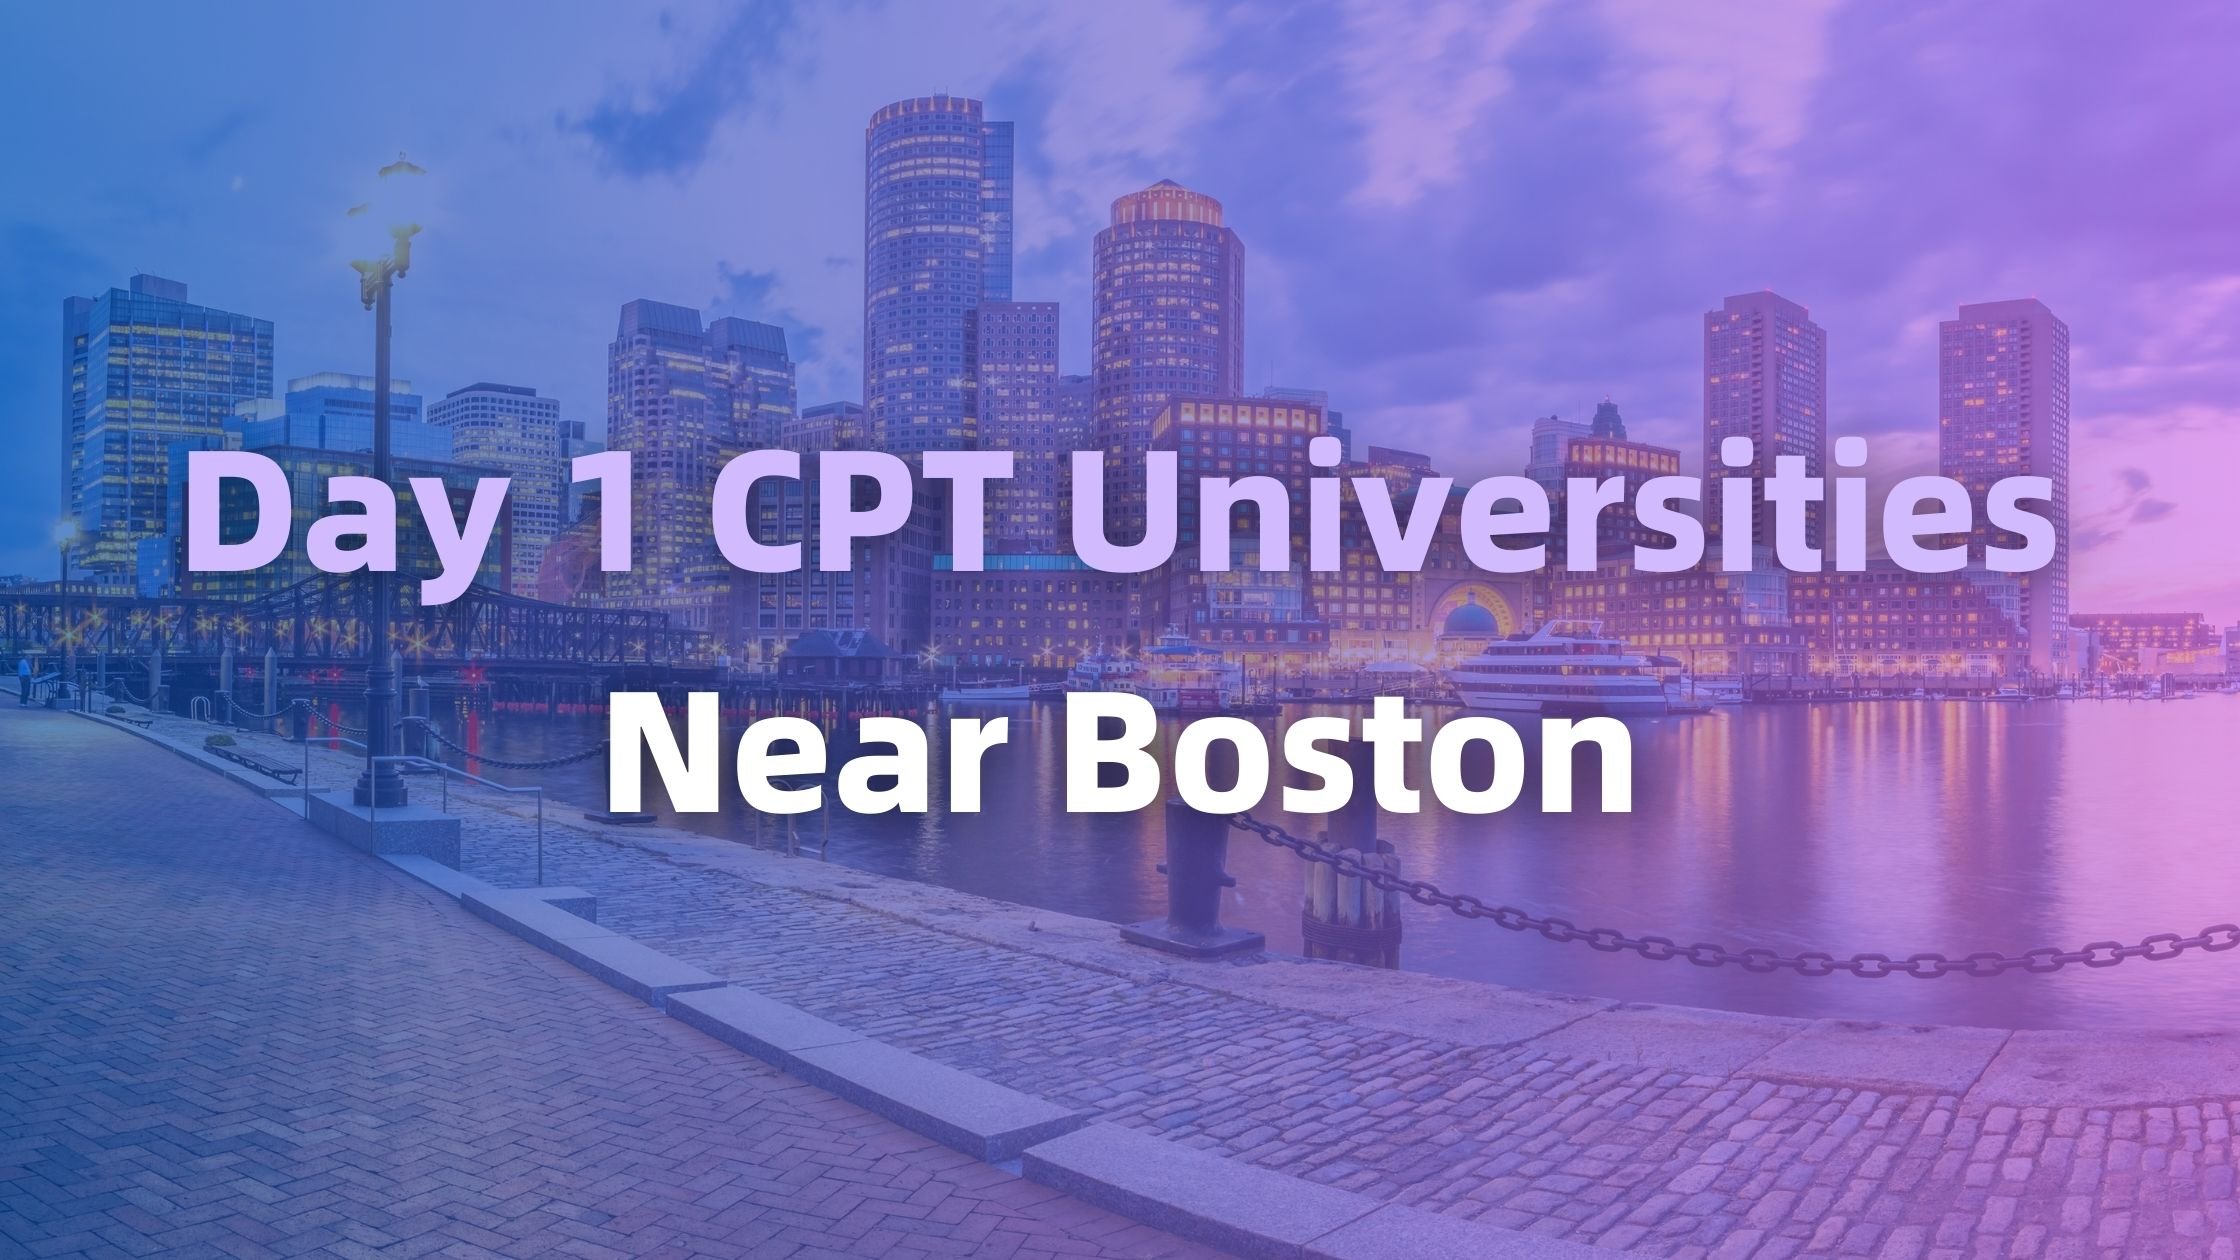 Day 1 CPT Universities Near Boston